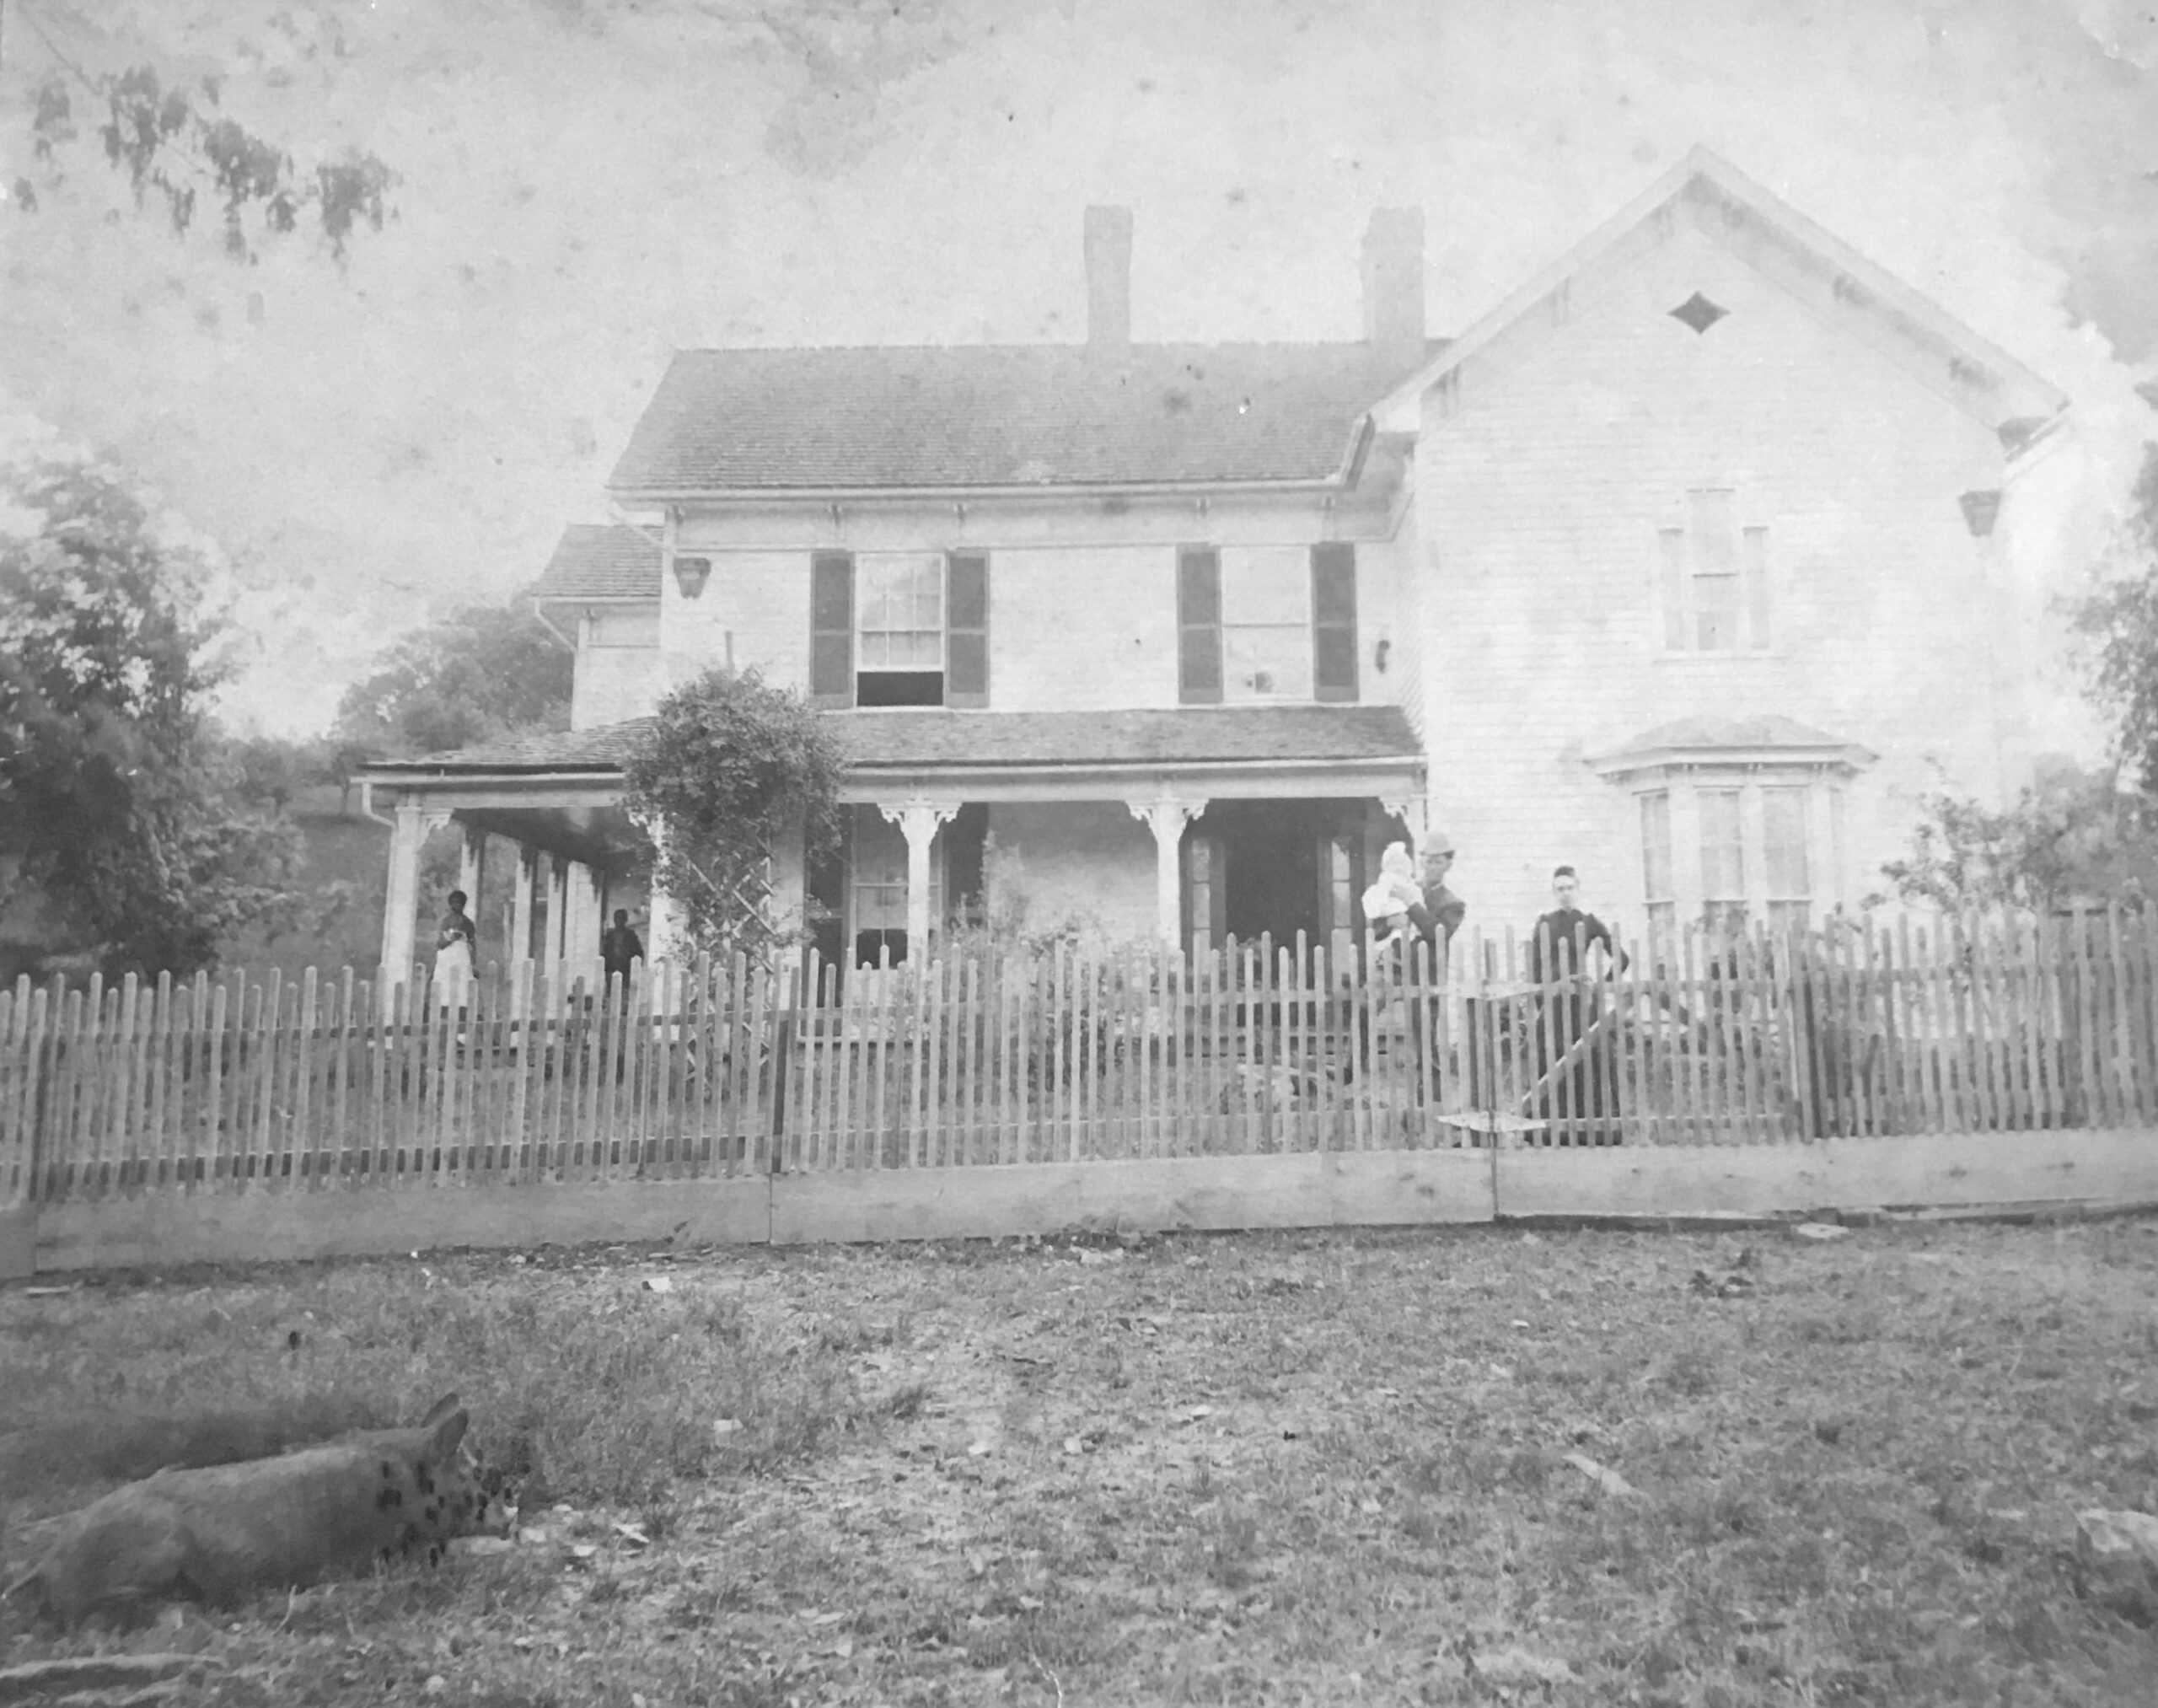 Photo date: 1891